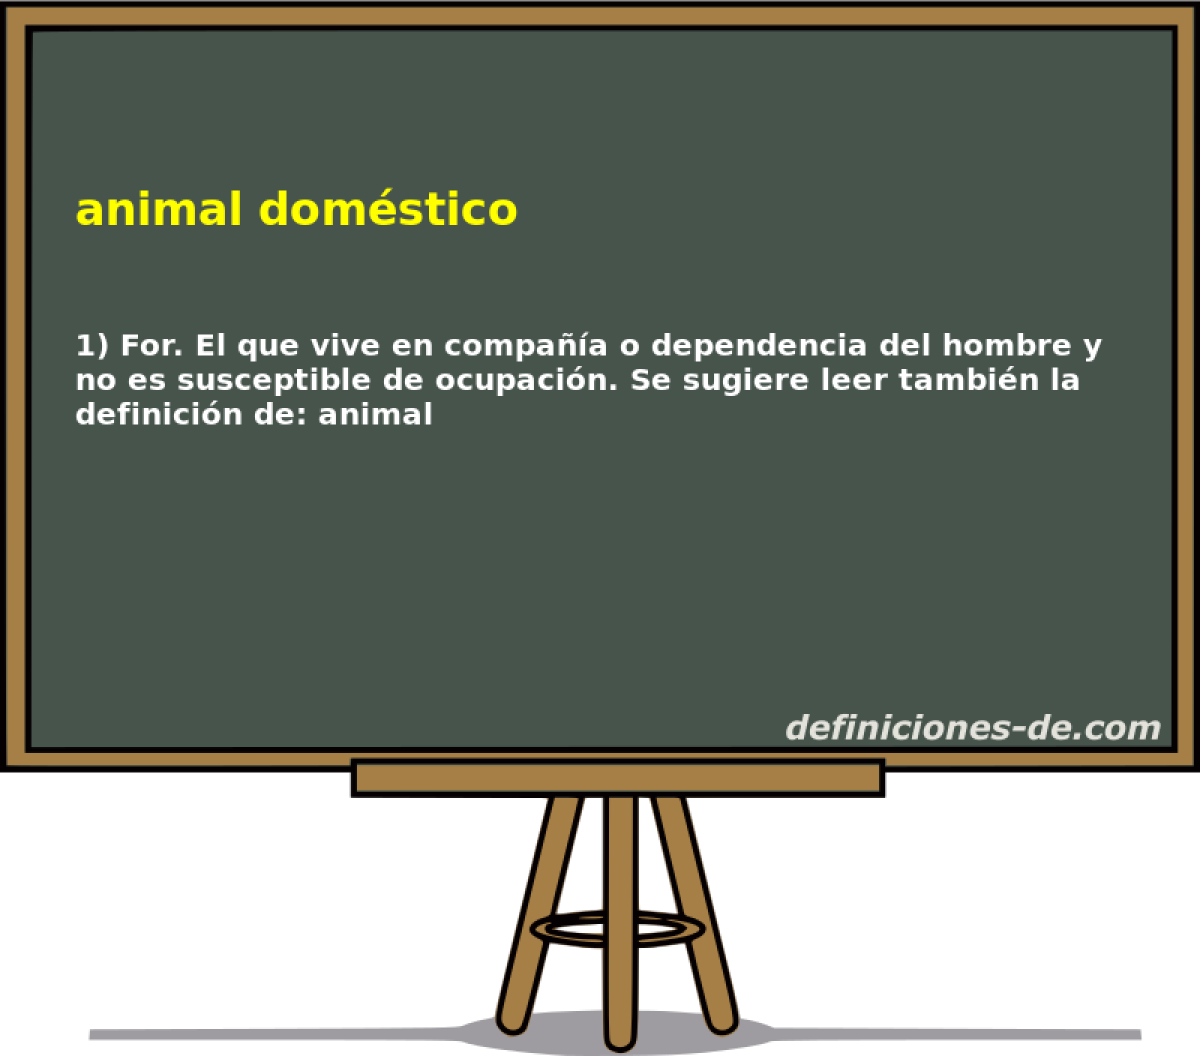 animal domstico 